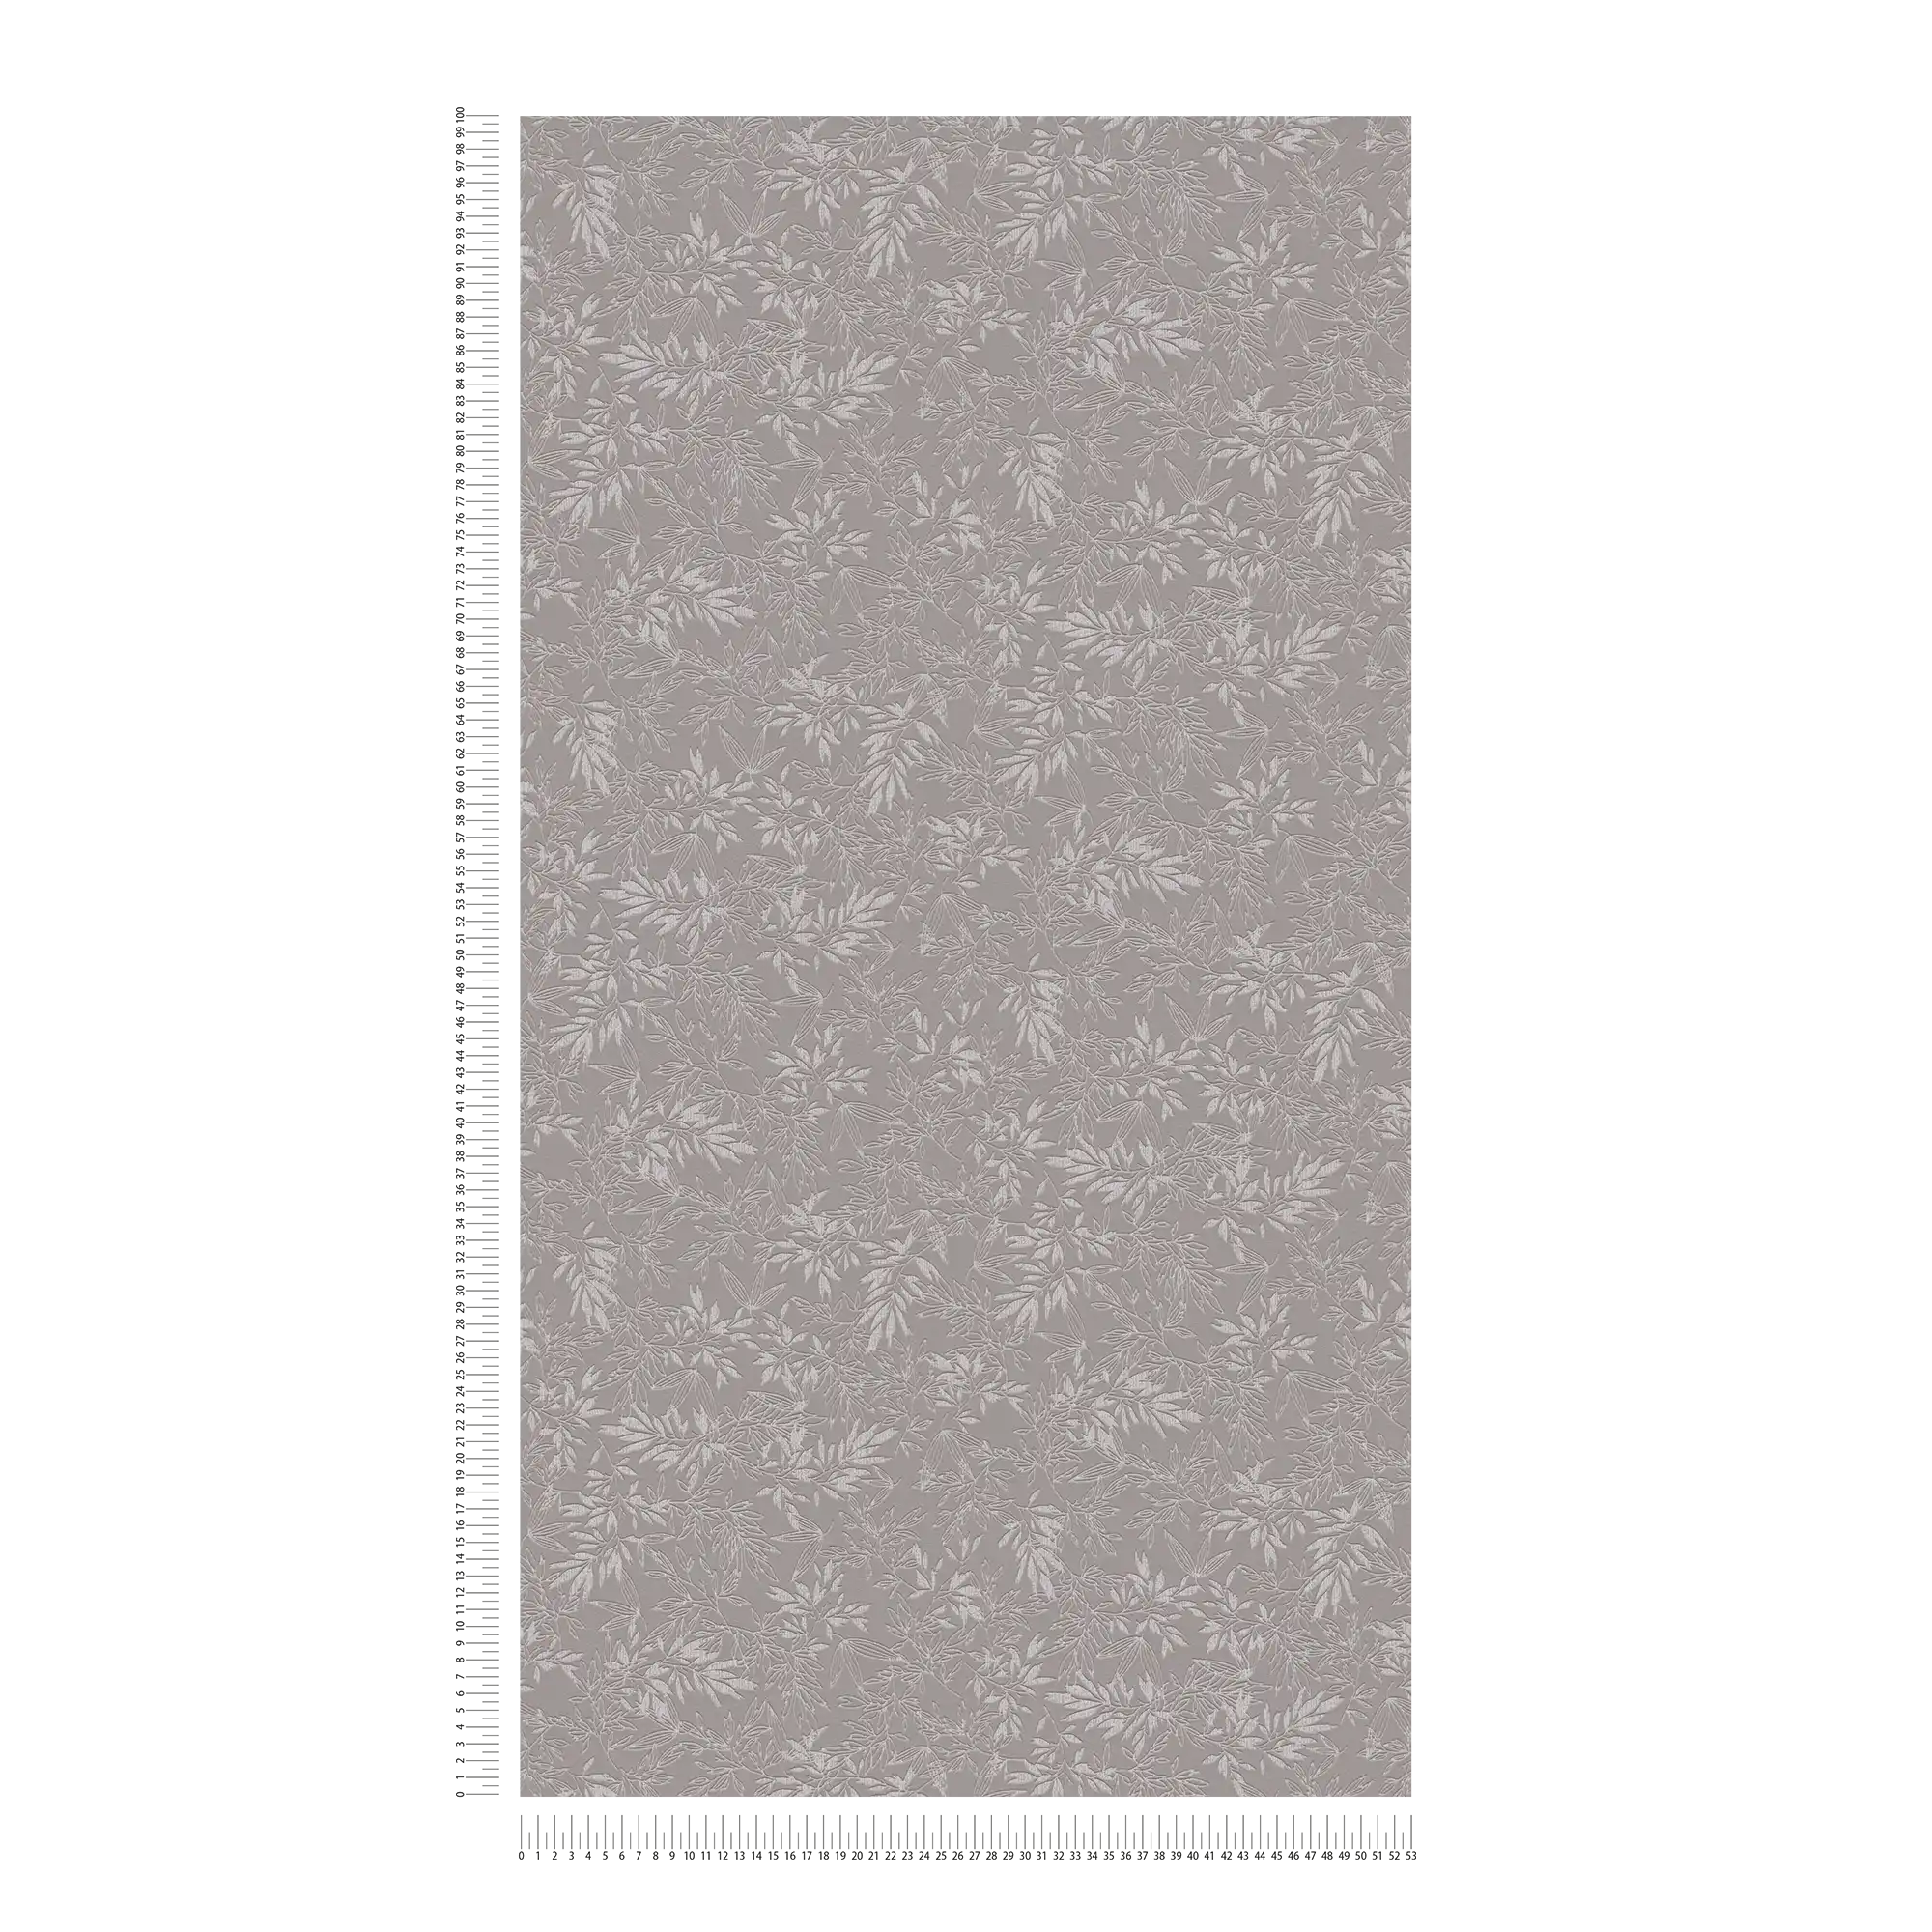             Leaves wallpaper with foam structure in matt - grey, light grey
        